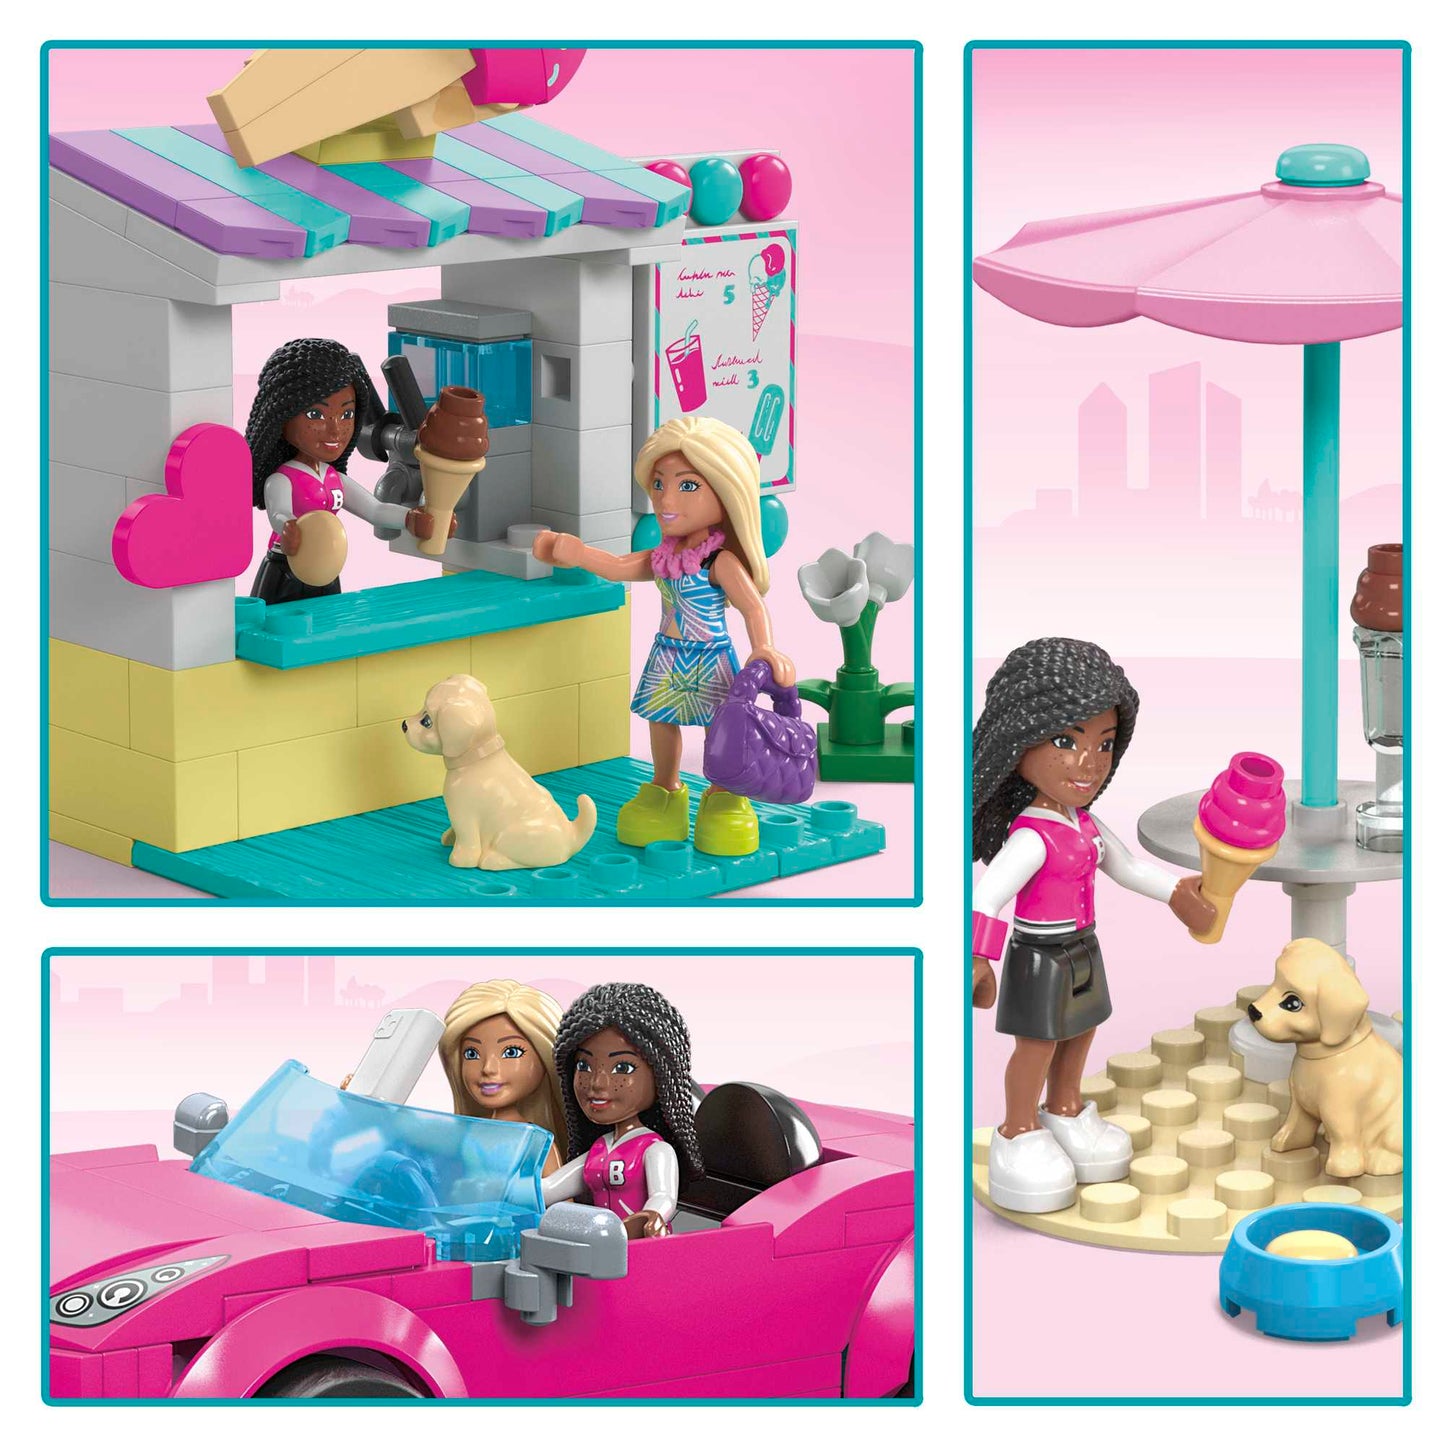 MEGA™ Barbie Convertible & Ice Cream Stand